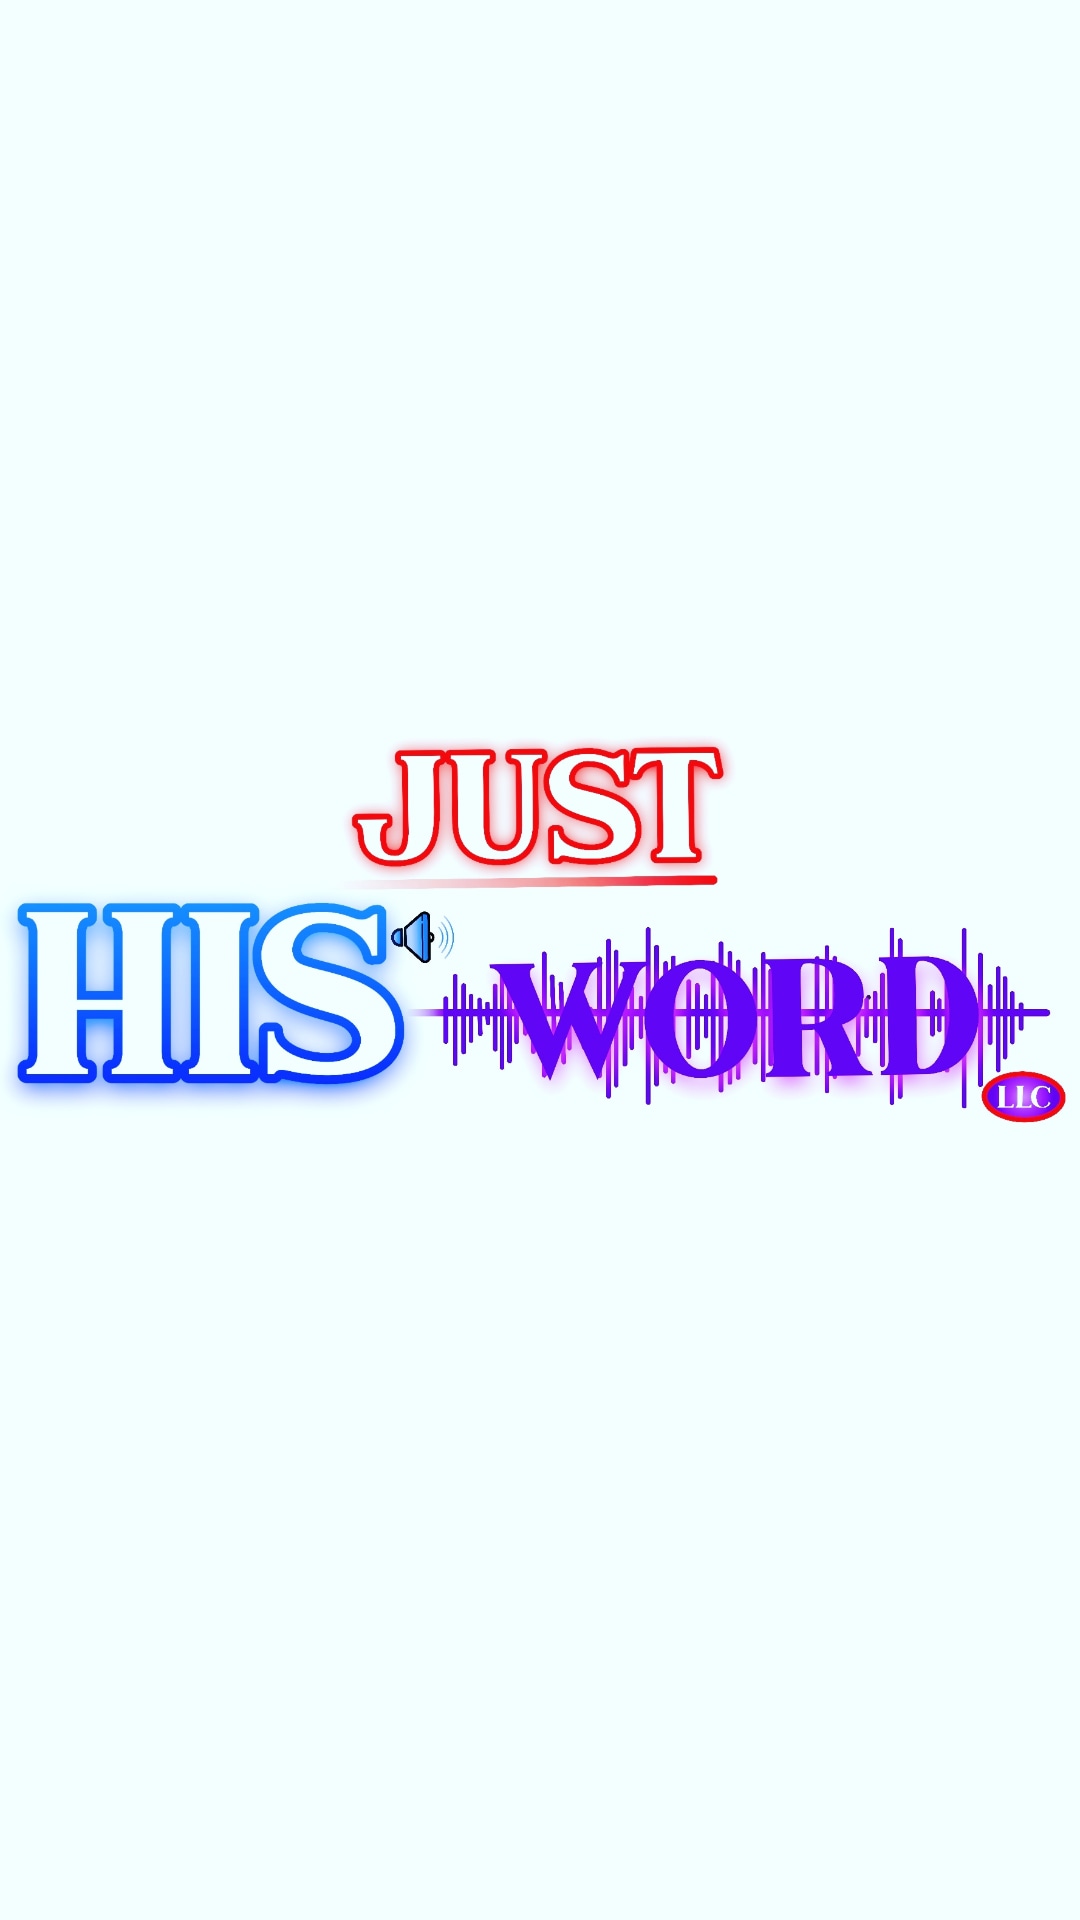 Just His Word, LLC Logo